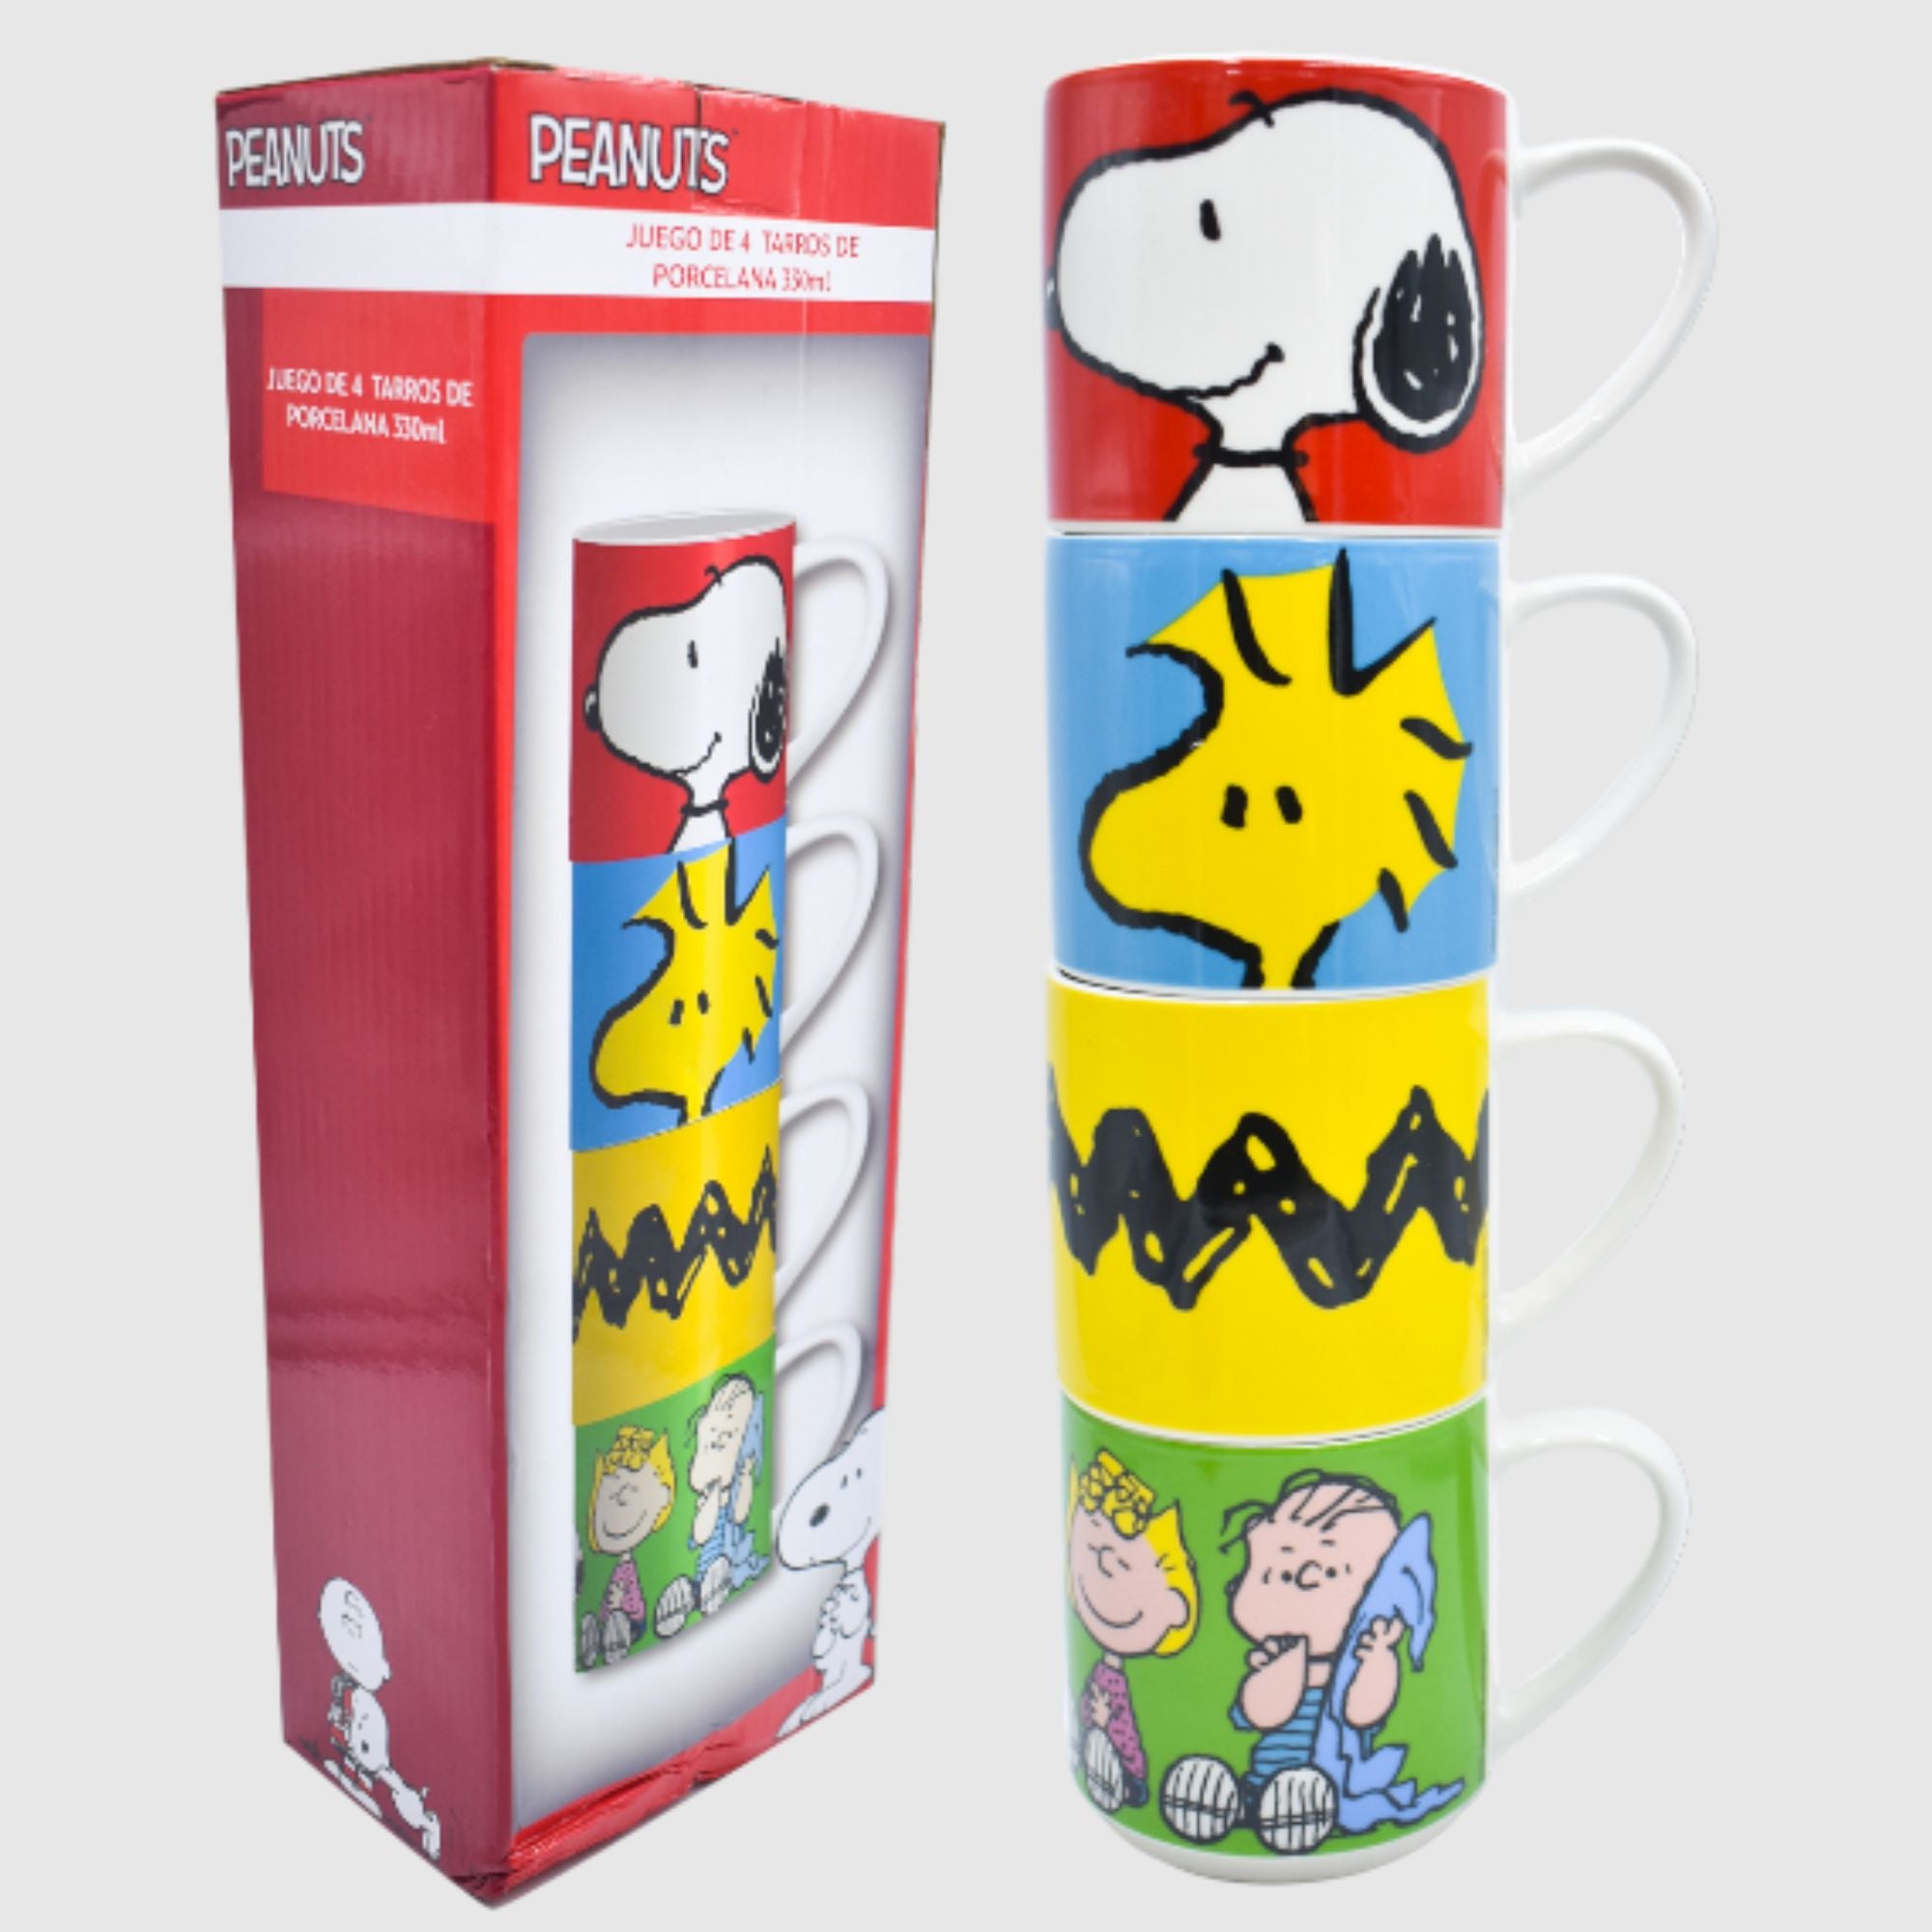 Set Juego Tazas Apilables Fun Kids Peanuts Charly Brown Snoopy Porcelana 330ml 4pzas